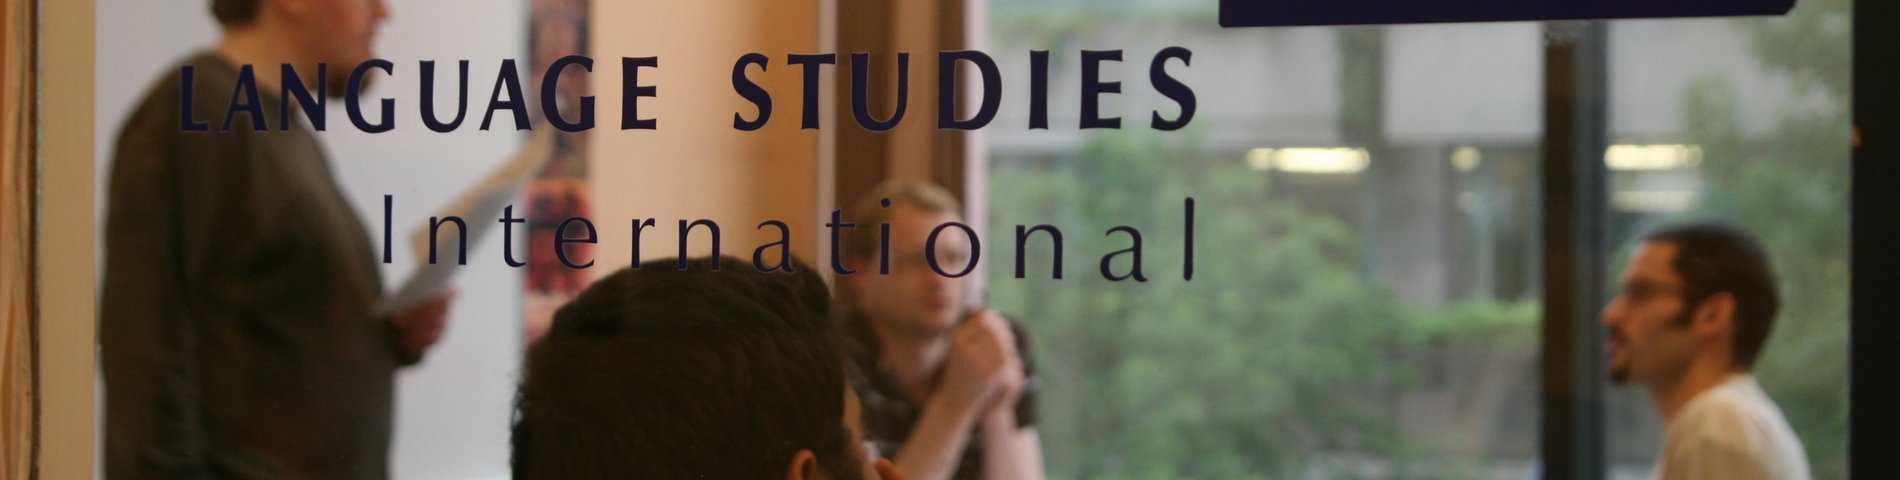 LSI - Language Studies International 사진 1